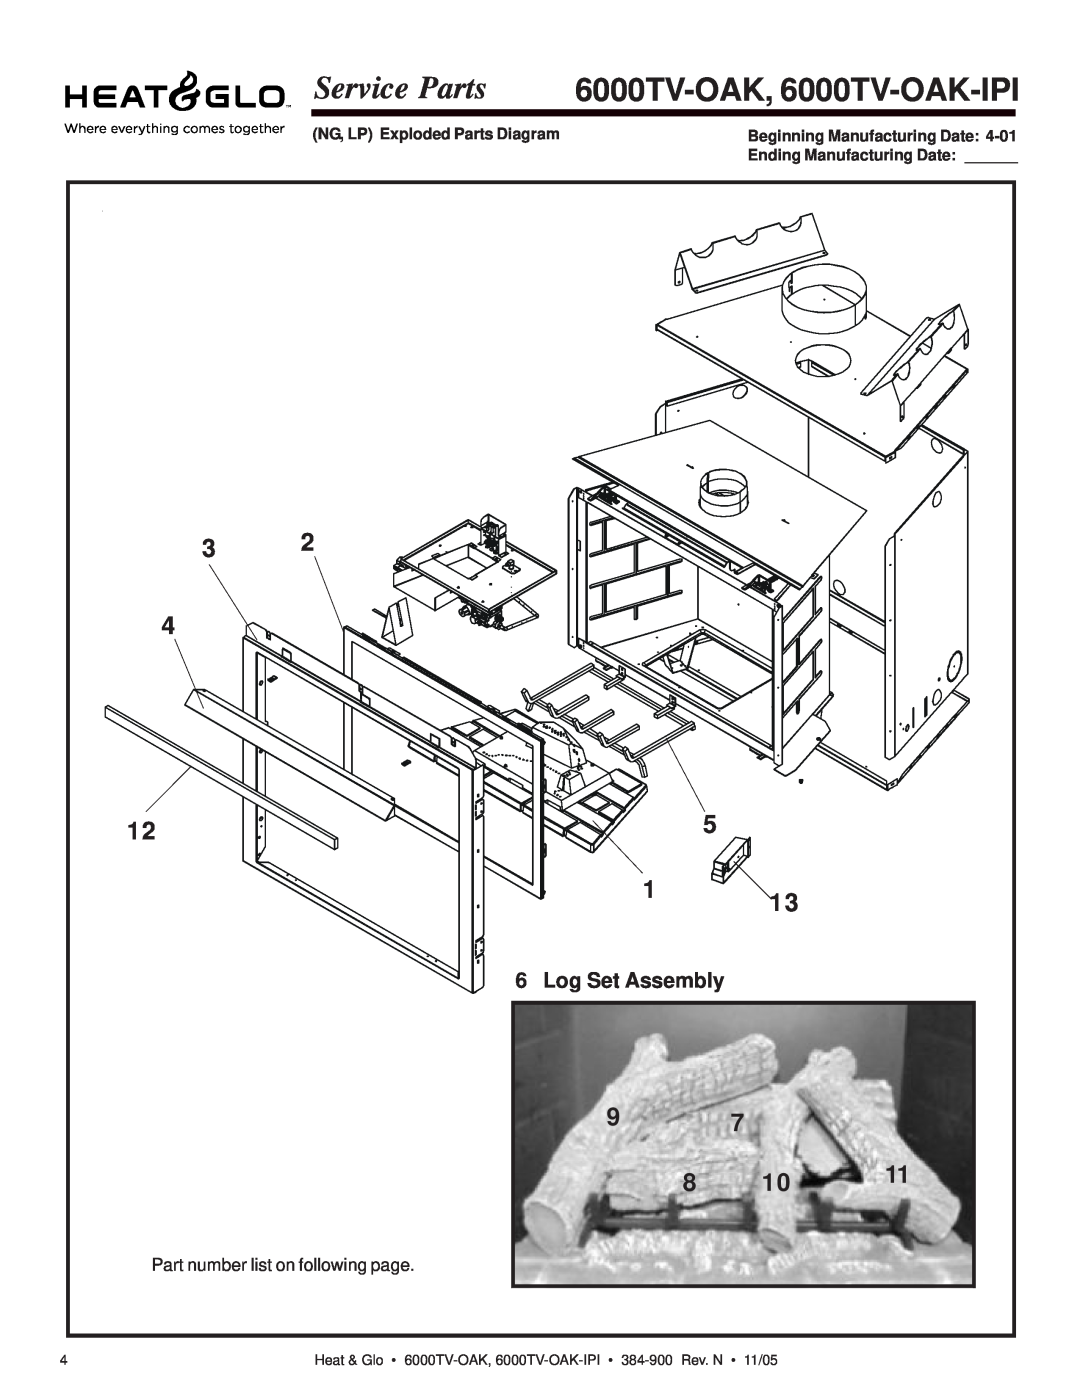 Heat & Glo LifeStyle Service Parts, Log Set Assembly, 6000TV-OAK, 6000TV-OAK-IPI, NG, LP Exploded Parts Diagram 